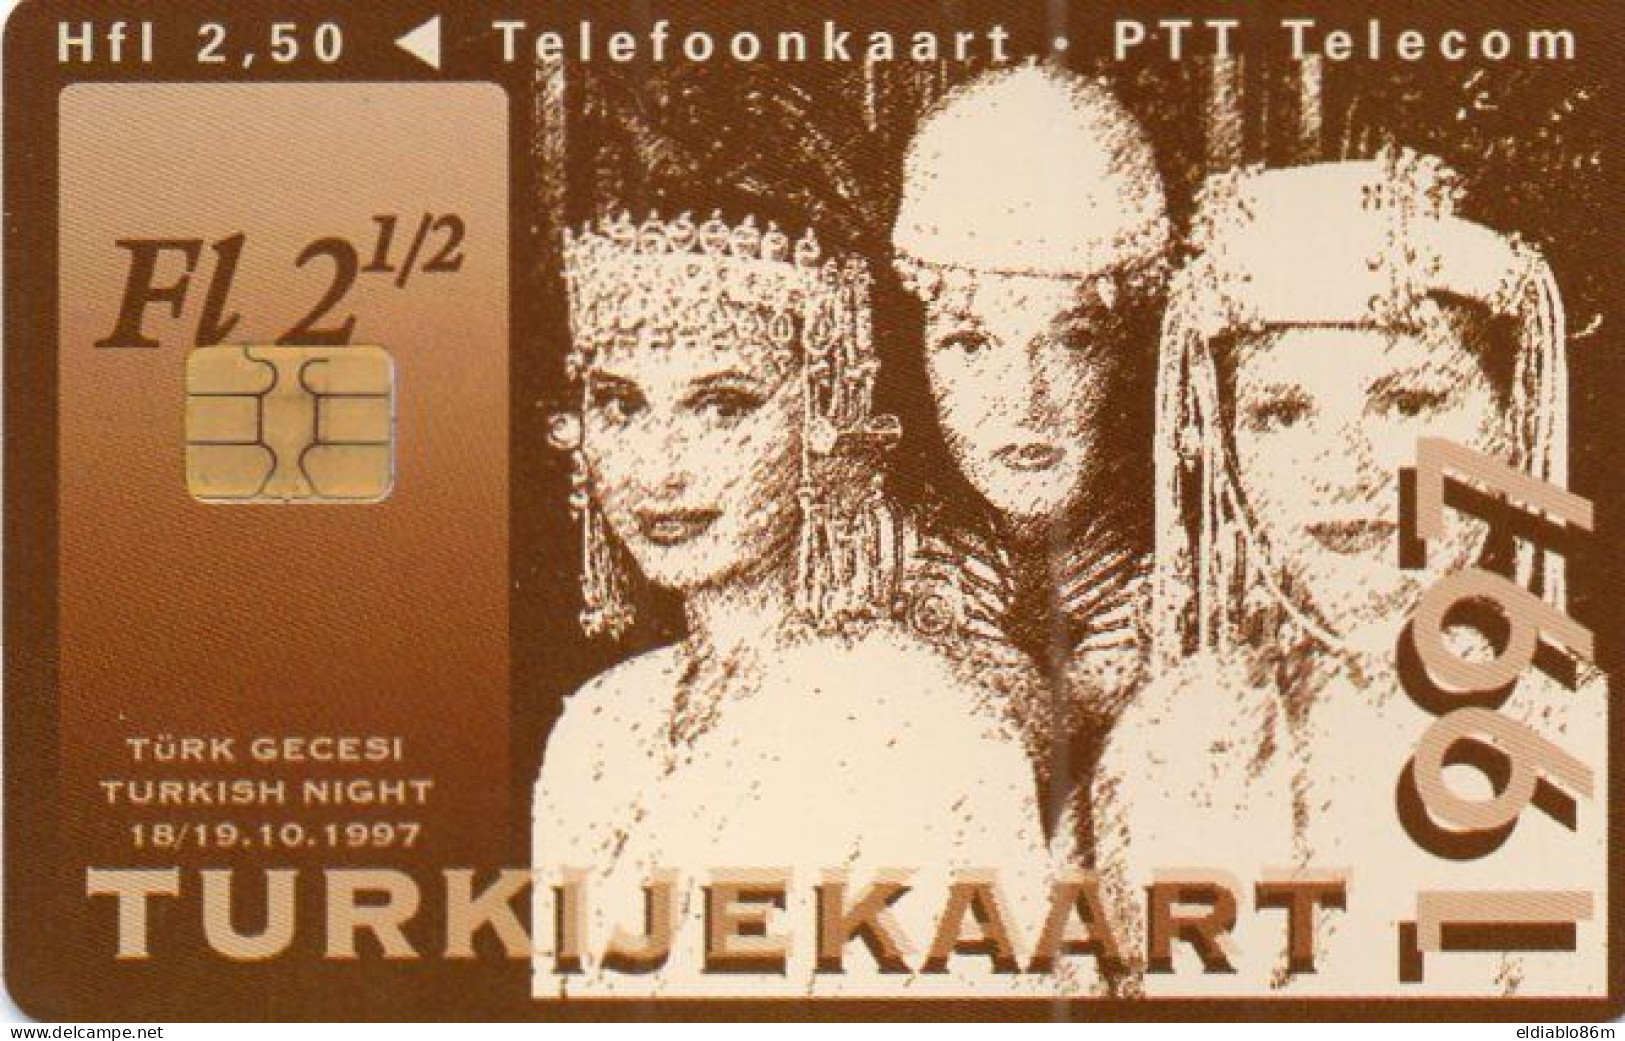 NETHERLANDS - CHIP CARD - CKD114 - TURKIJEKAART - TURKISH NIGHT - WOMAN - Públicas